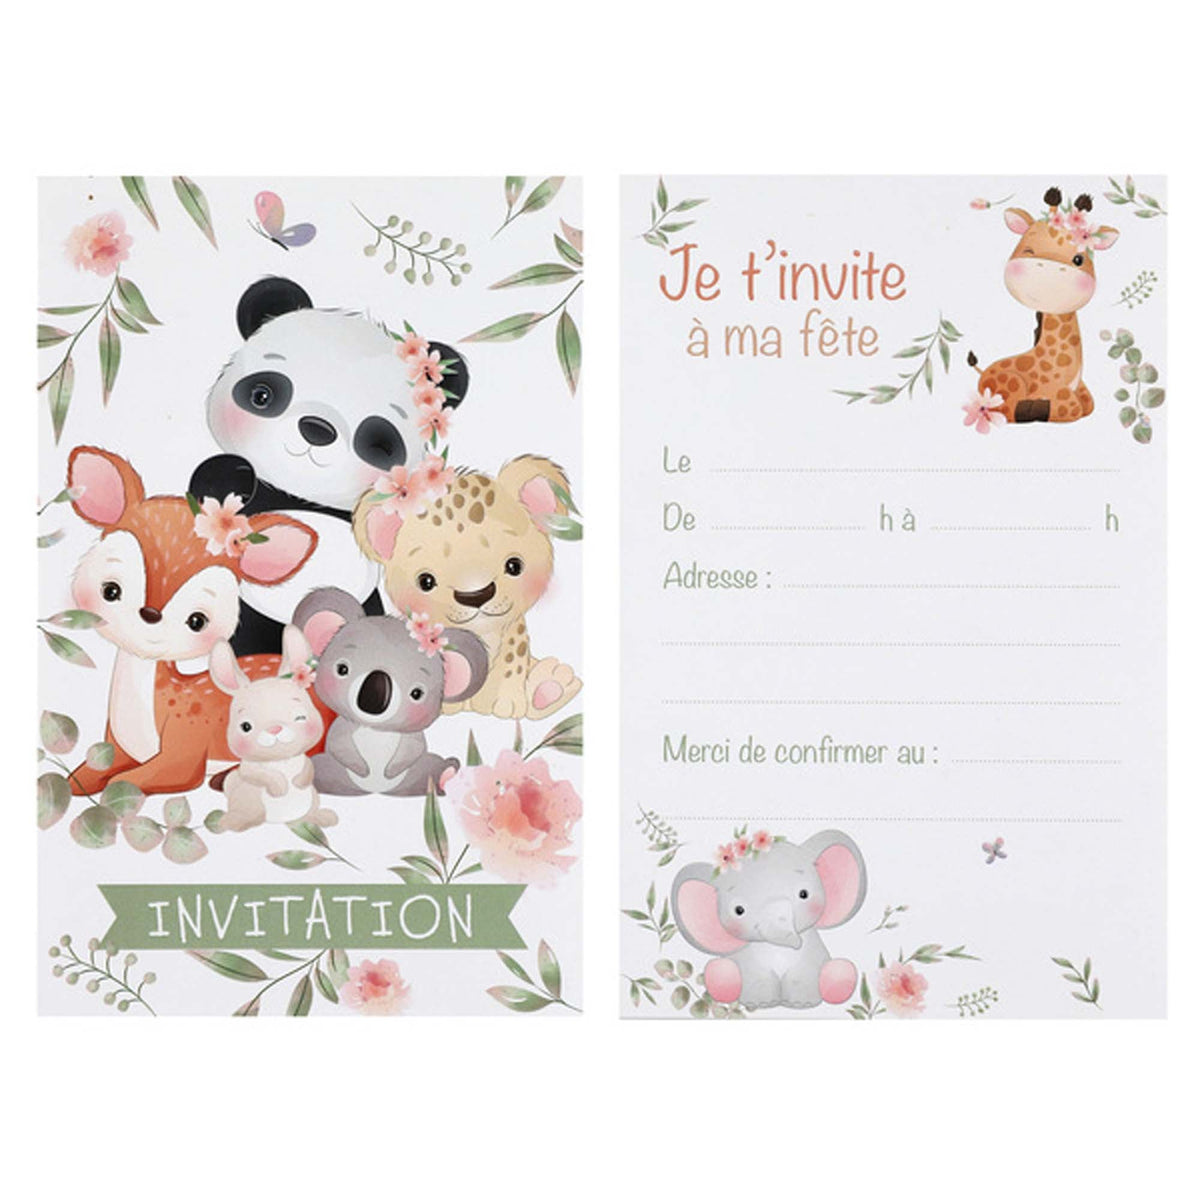 SANTEX Kids Birthday Explorer Birthday Party Invitation Cards, French Version, 6 Count 3660380088233